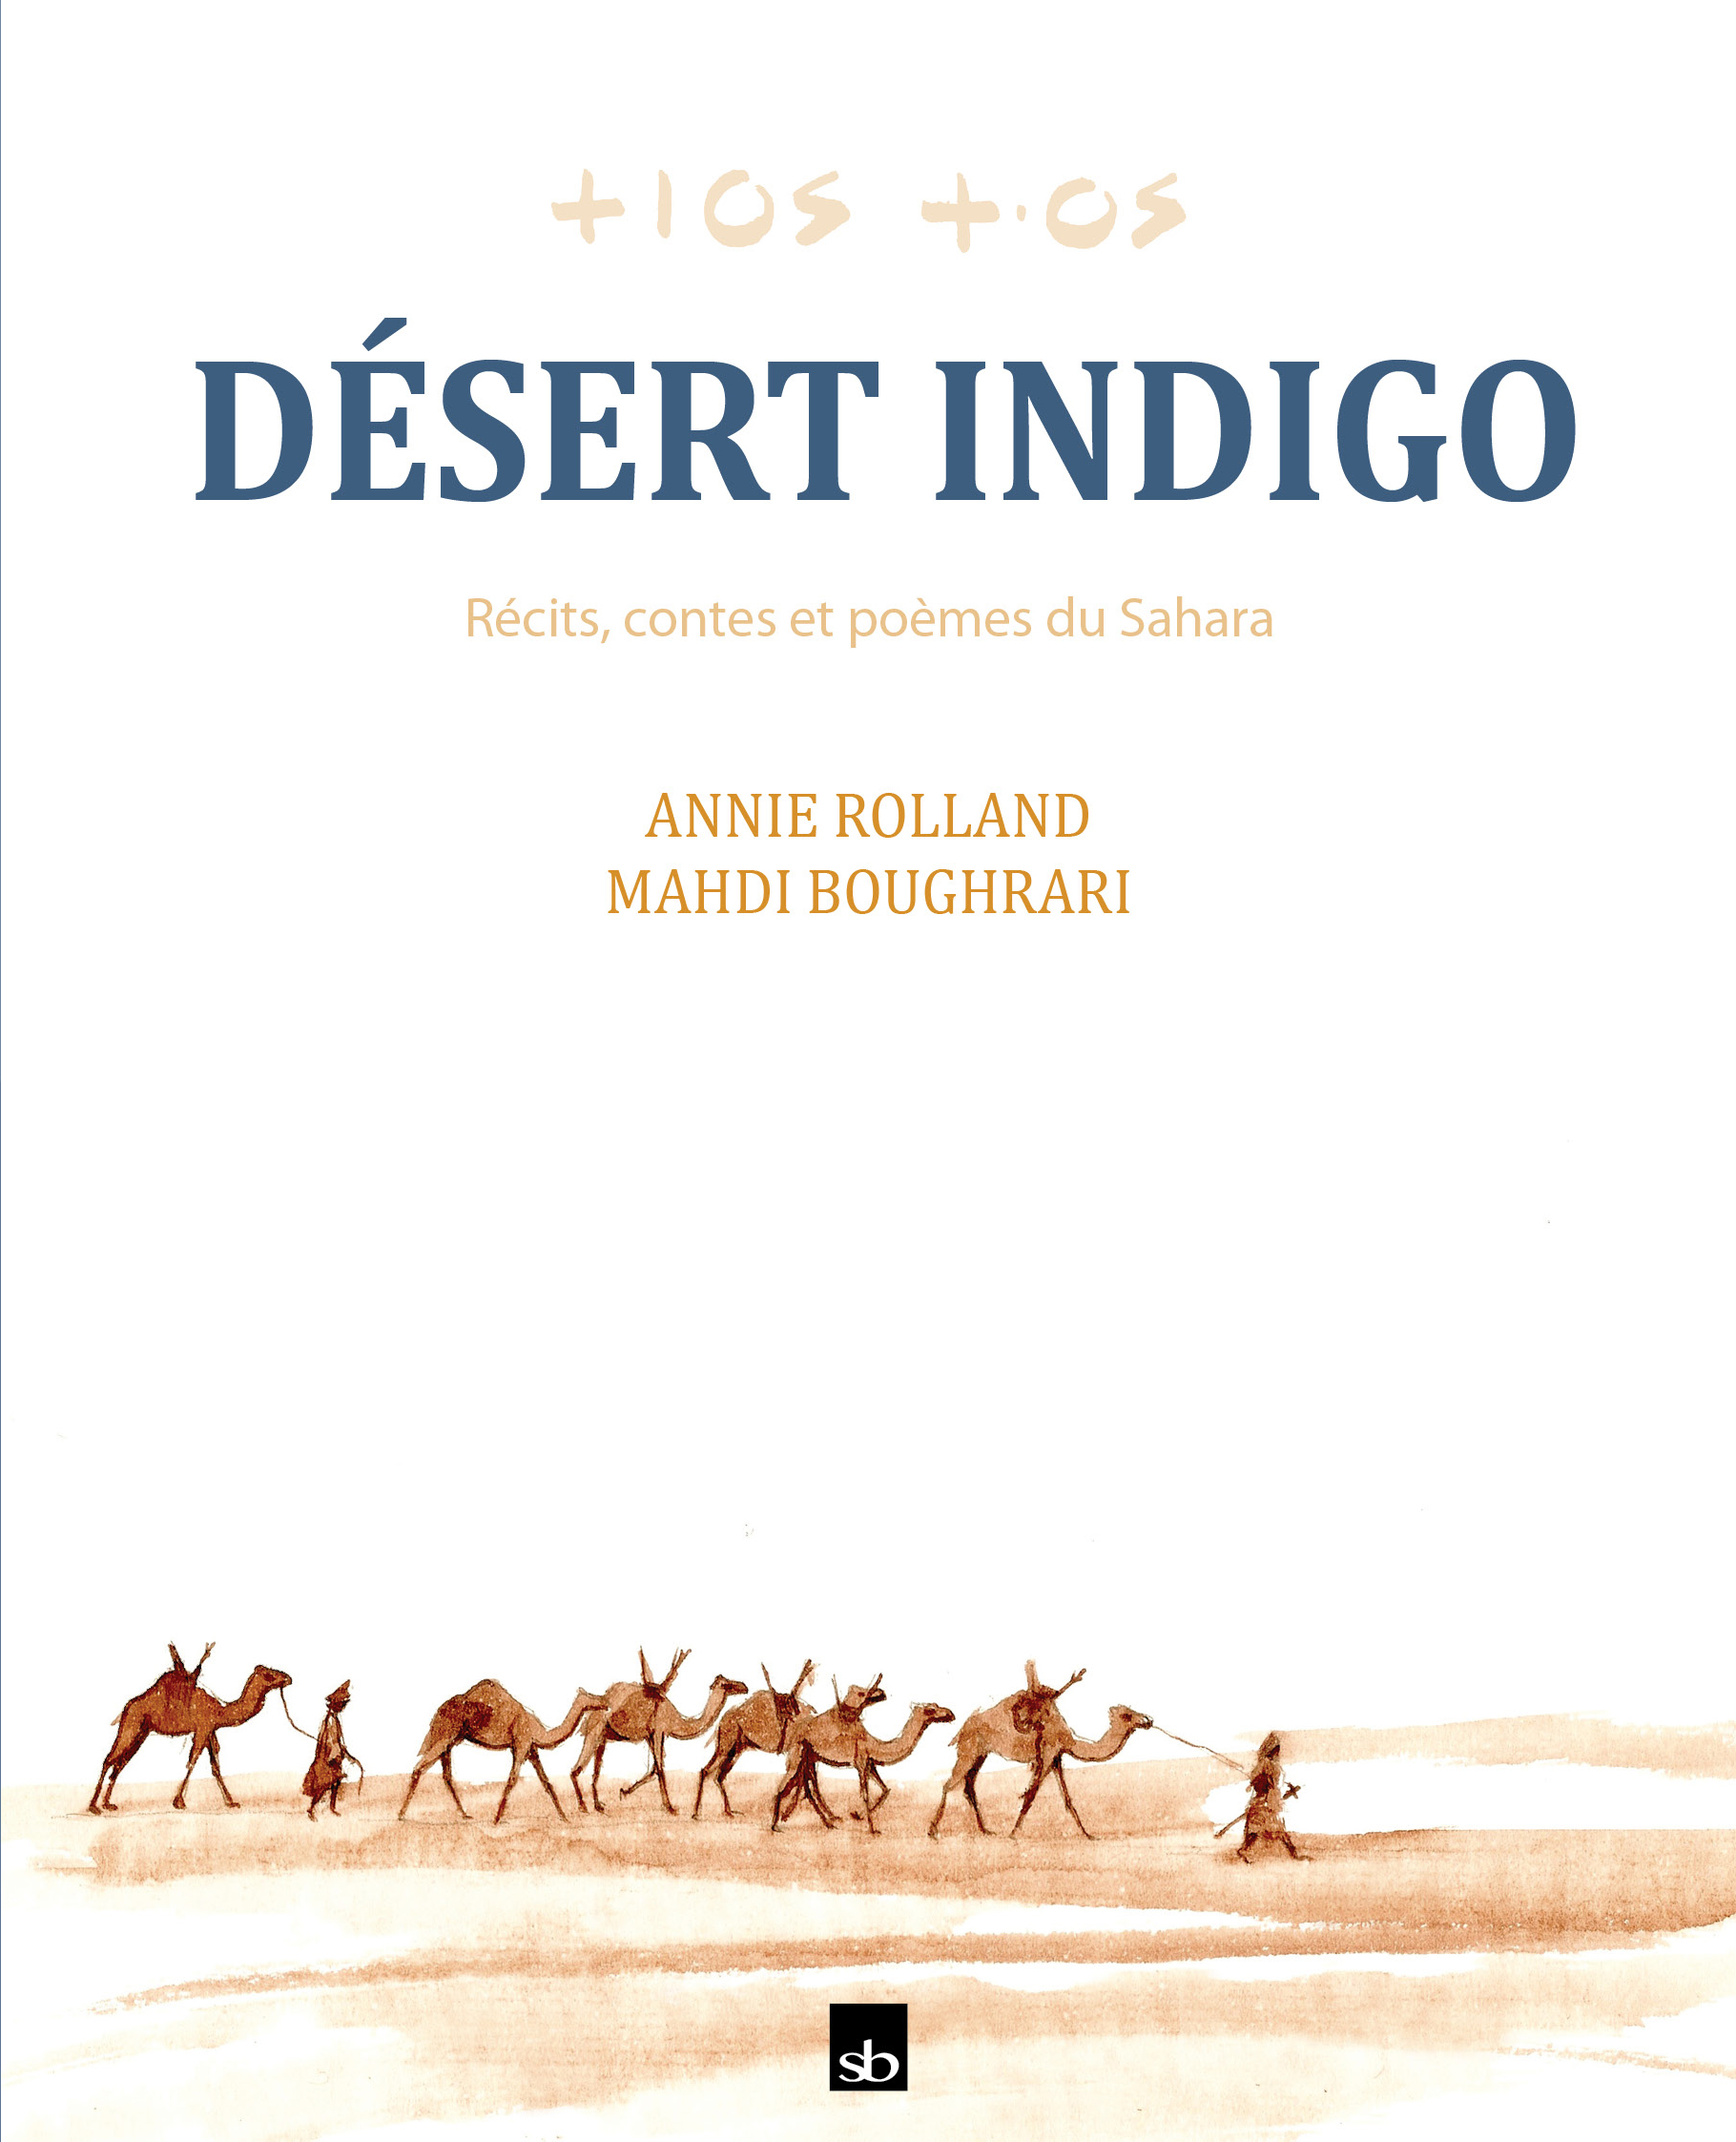 desert indigo c1